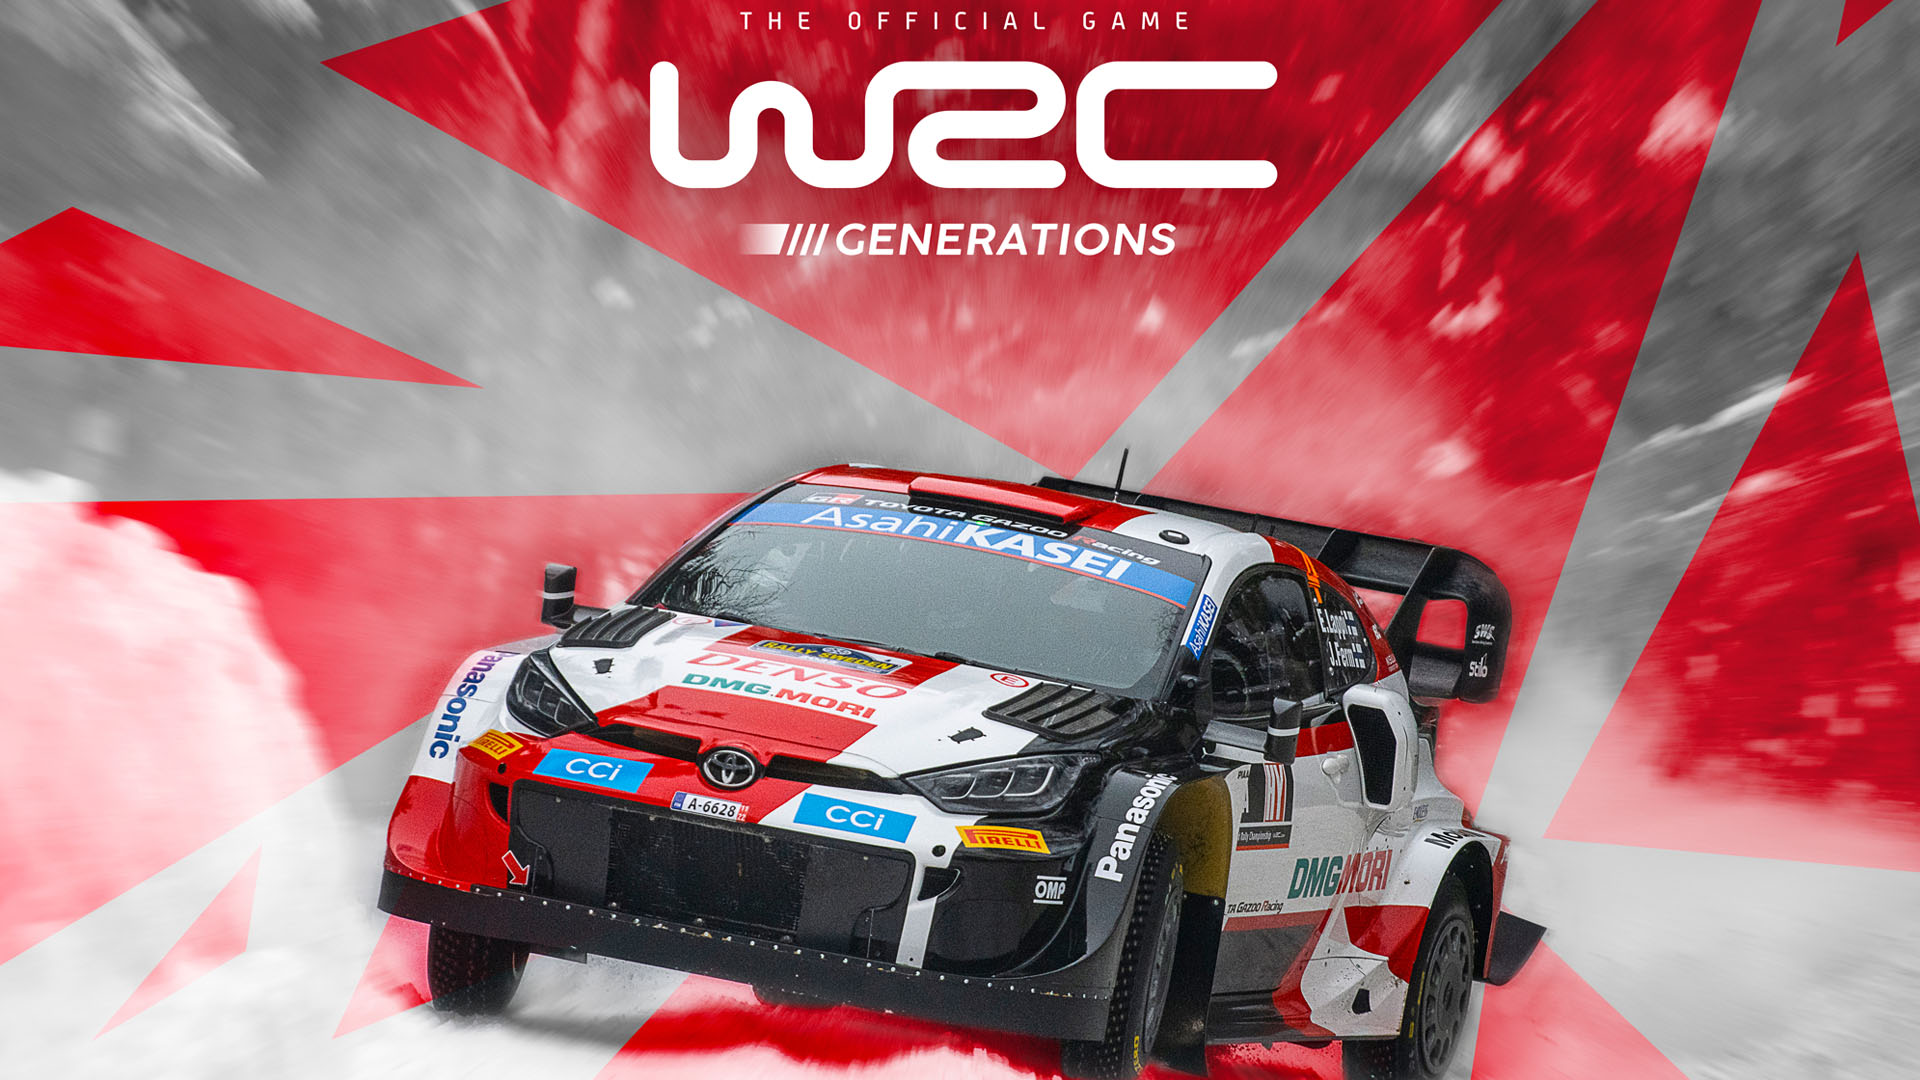 More information about "WRC Generations ci presenta la Peugeot 206 WRC di Marcus Grönholm"